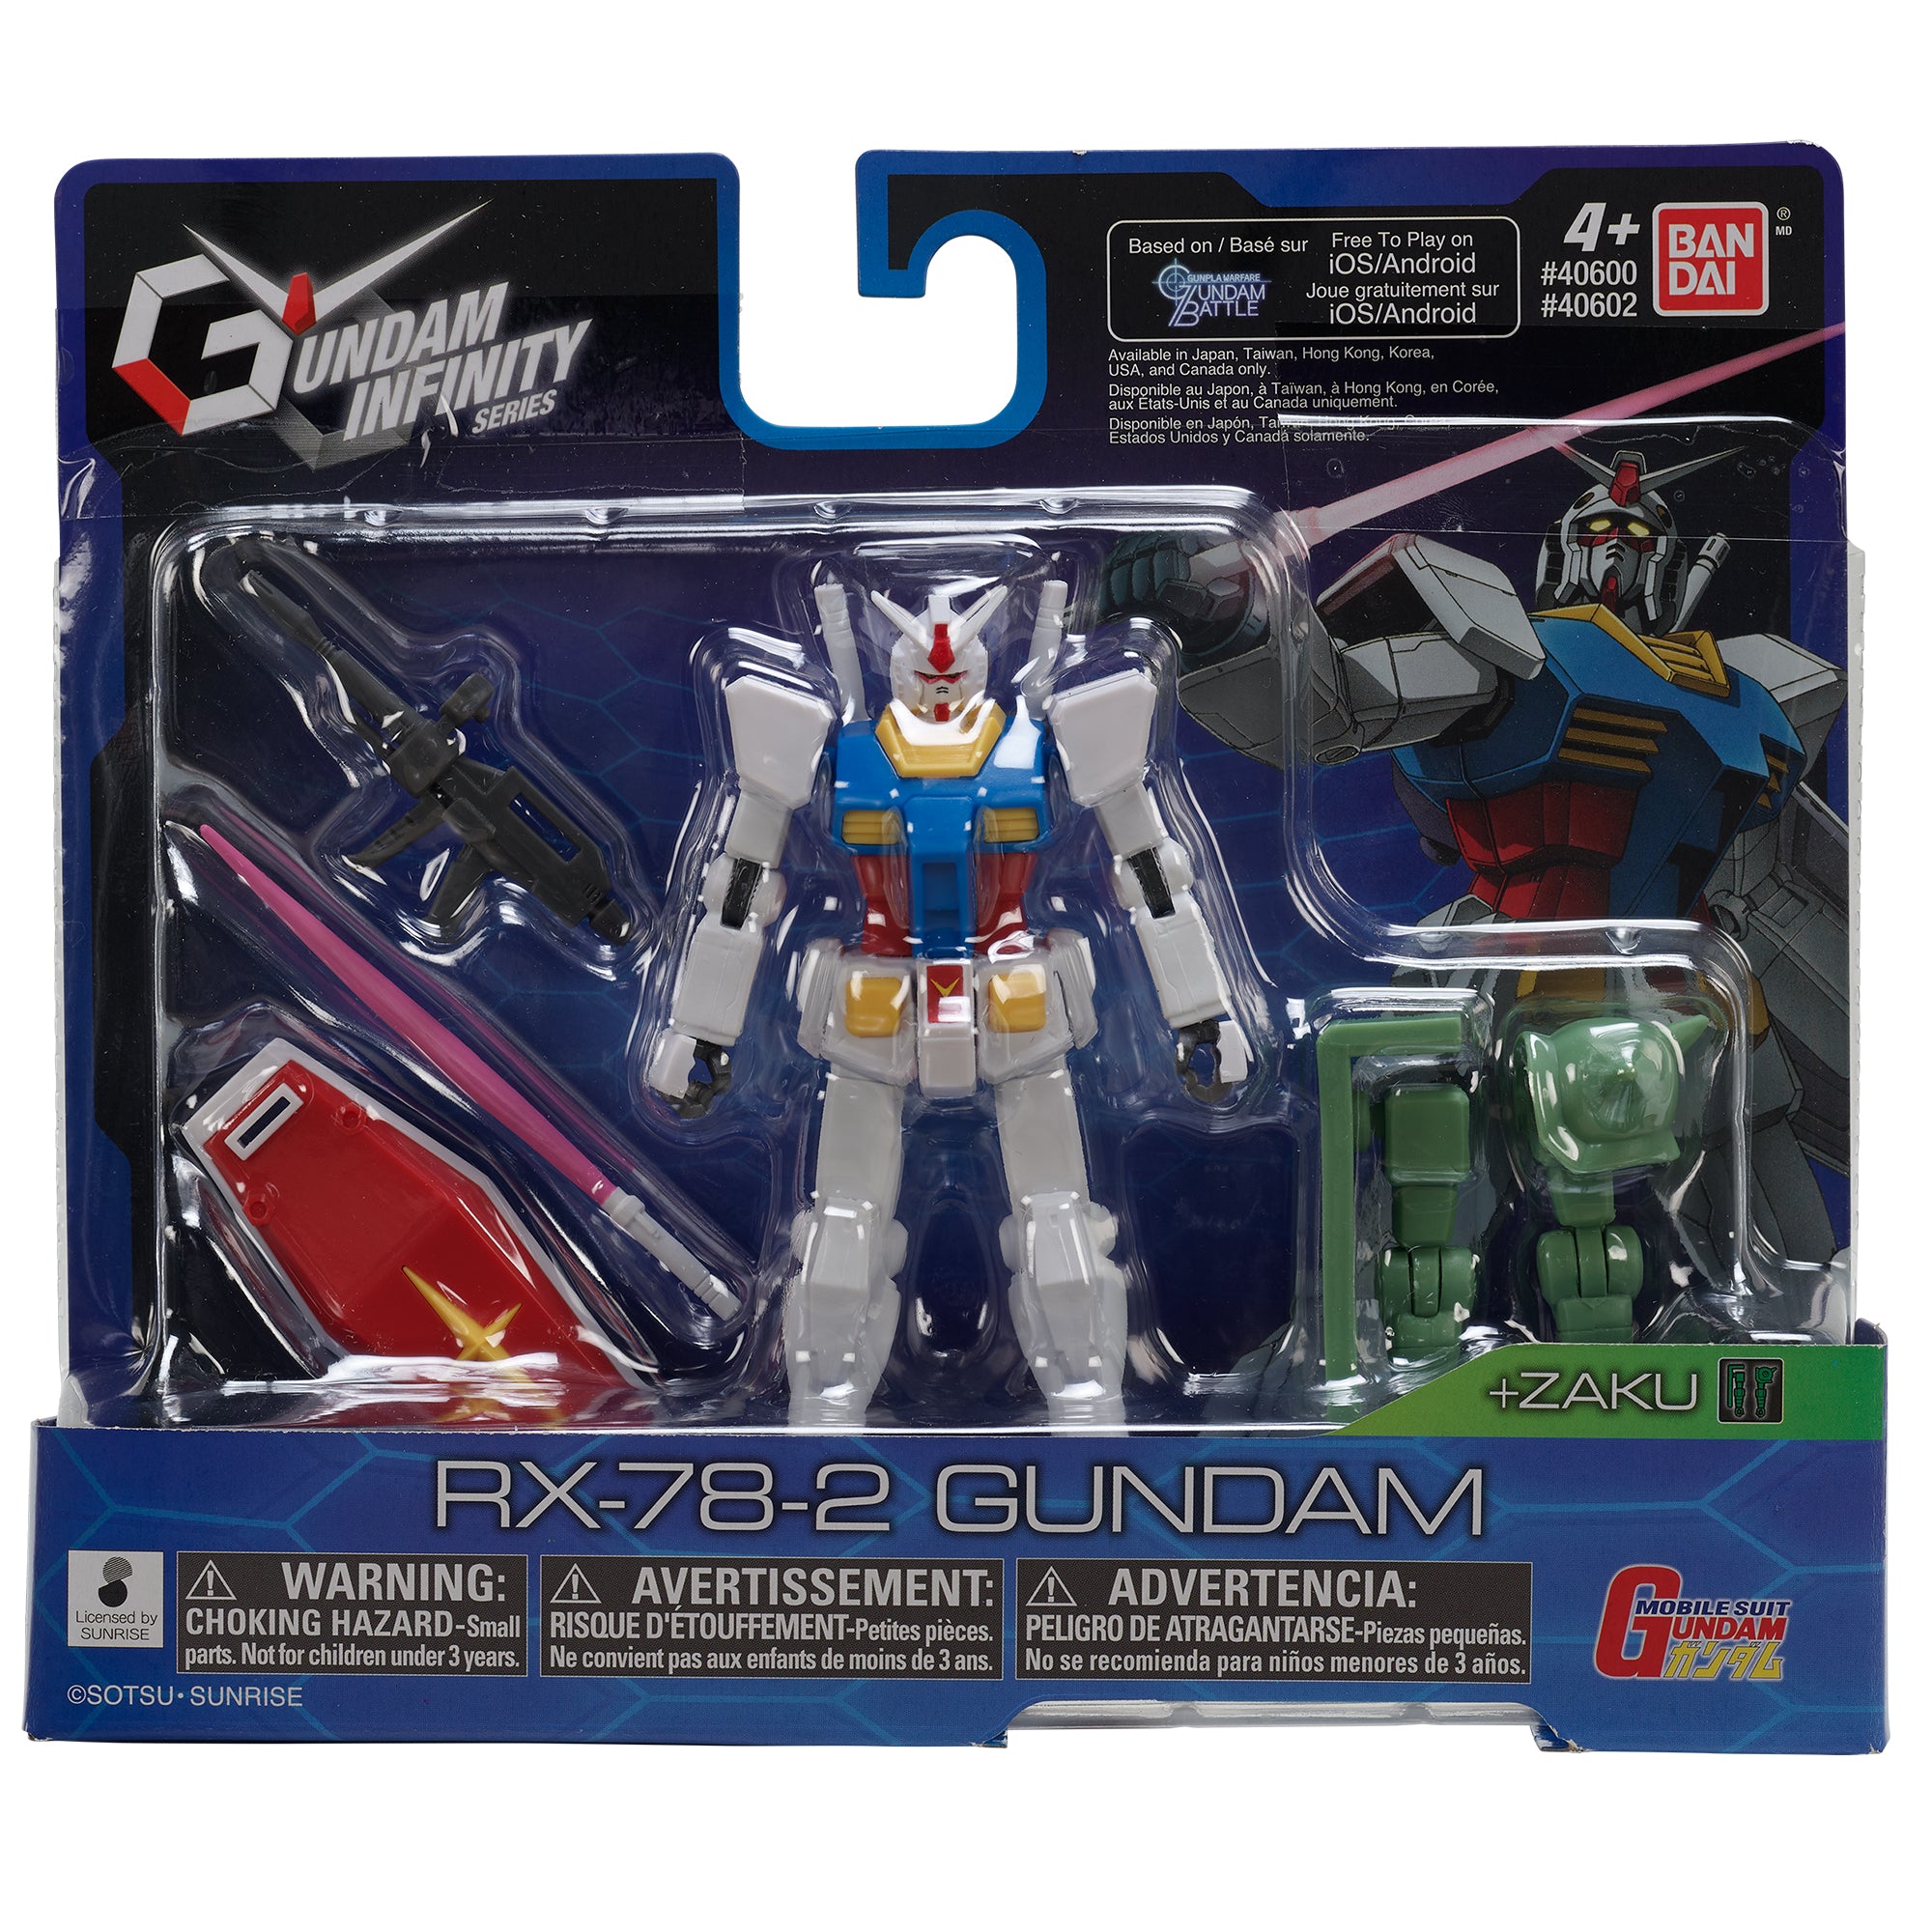 Gundam Infinity Rx 78 2